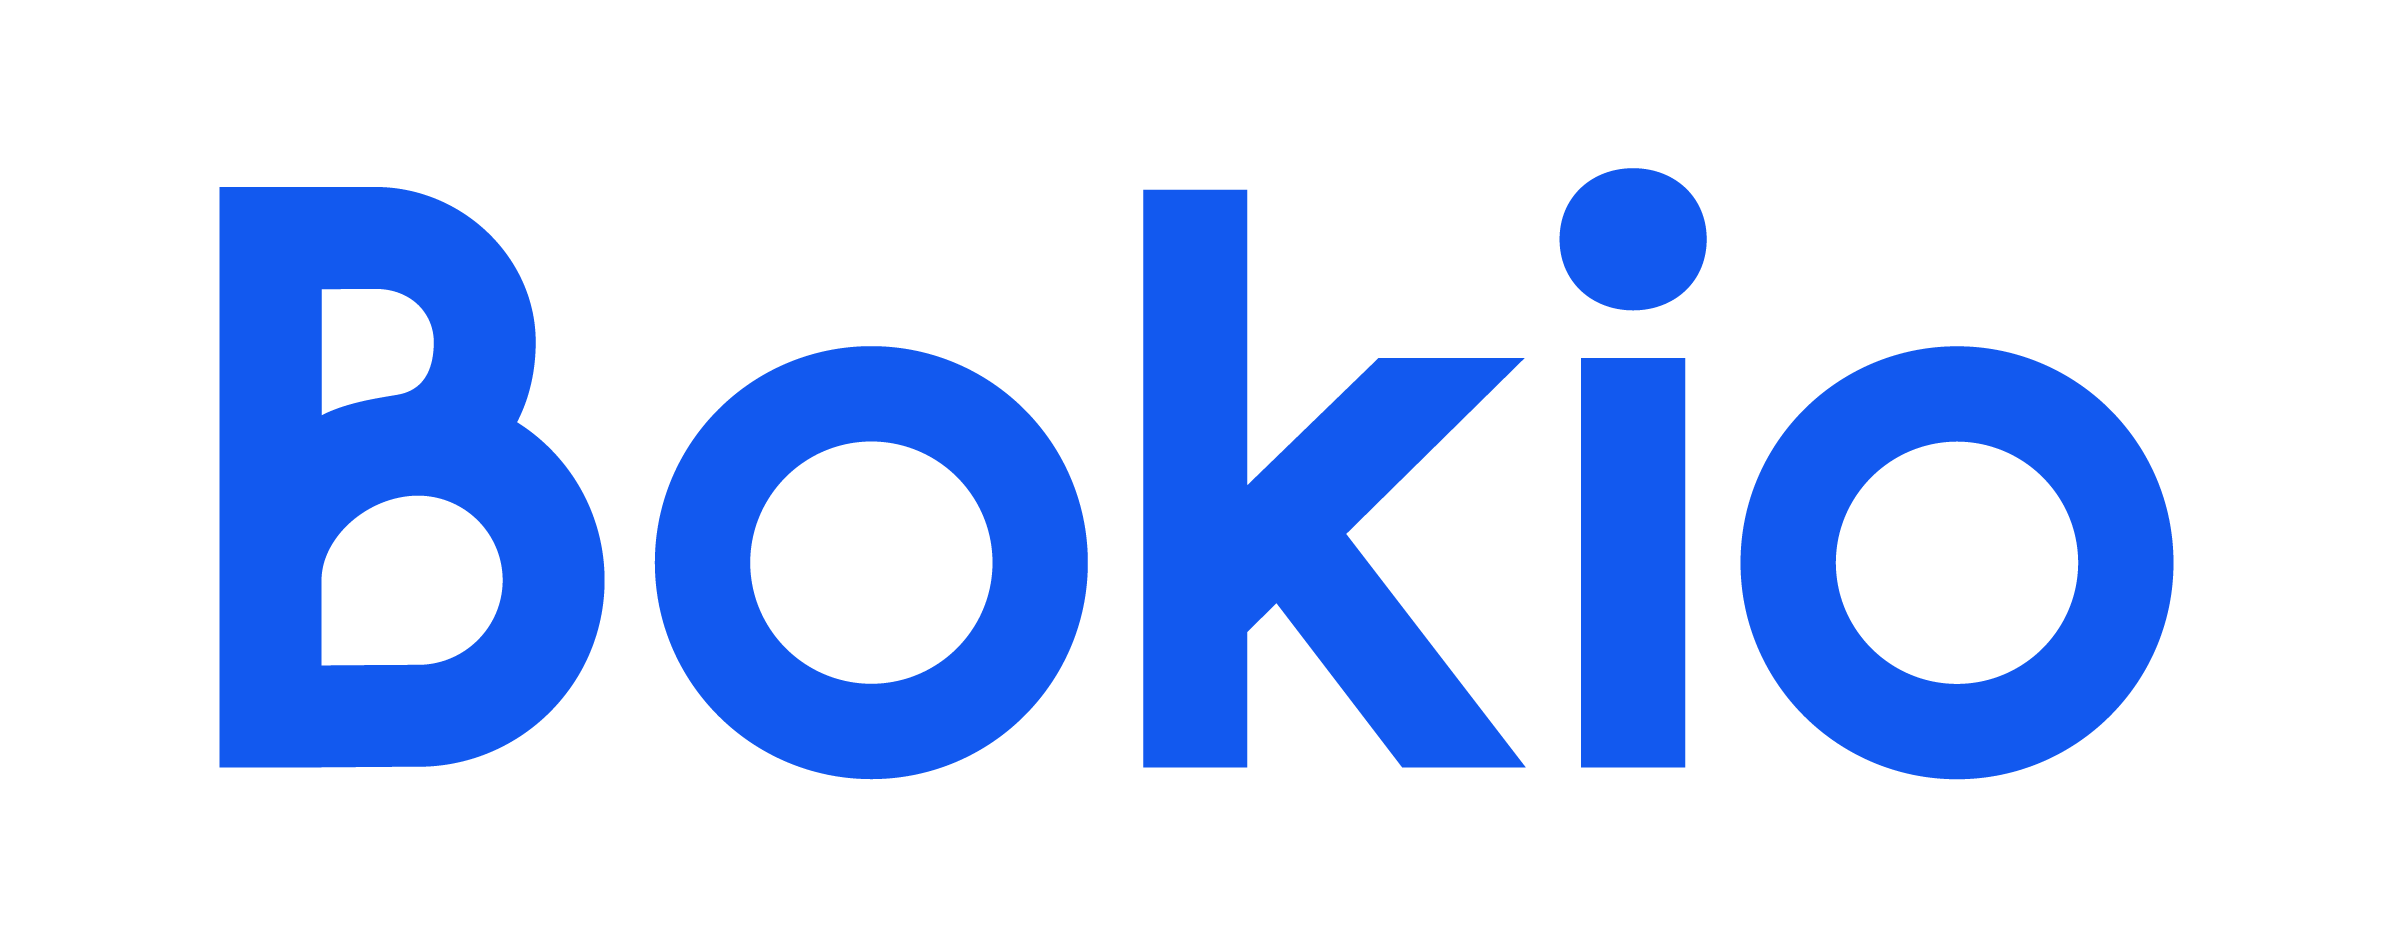 bokio_logo-primary_blue